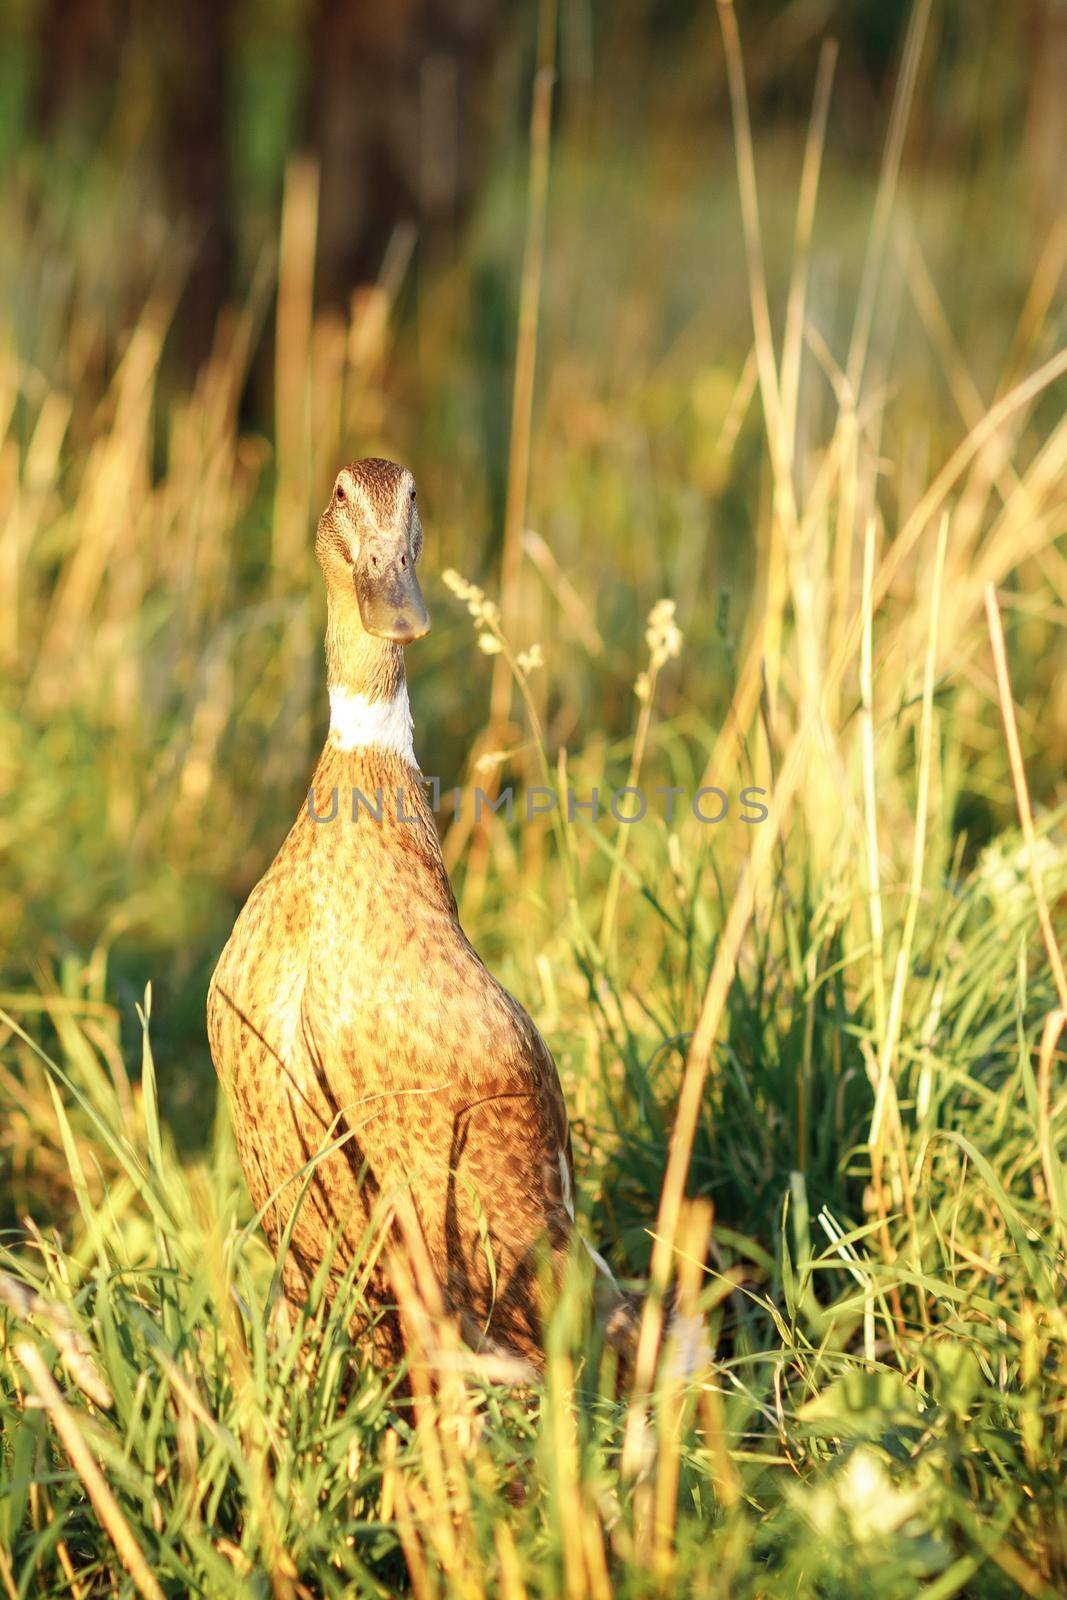 Close up of Indian runner duck in grass of garden by Lincikas